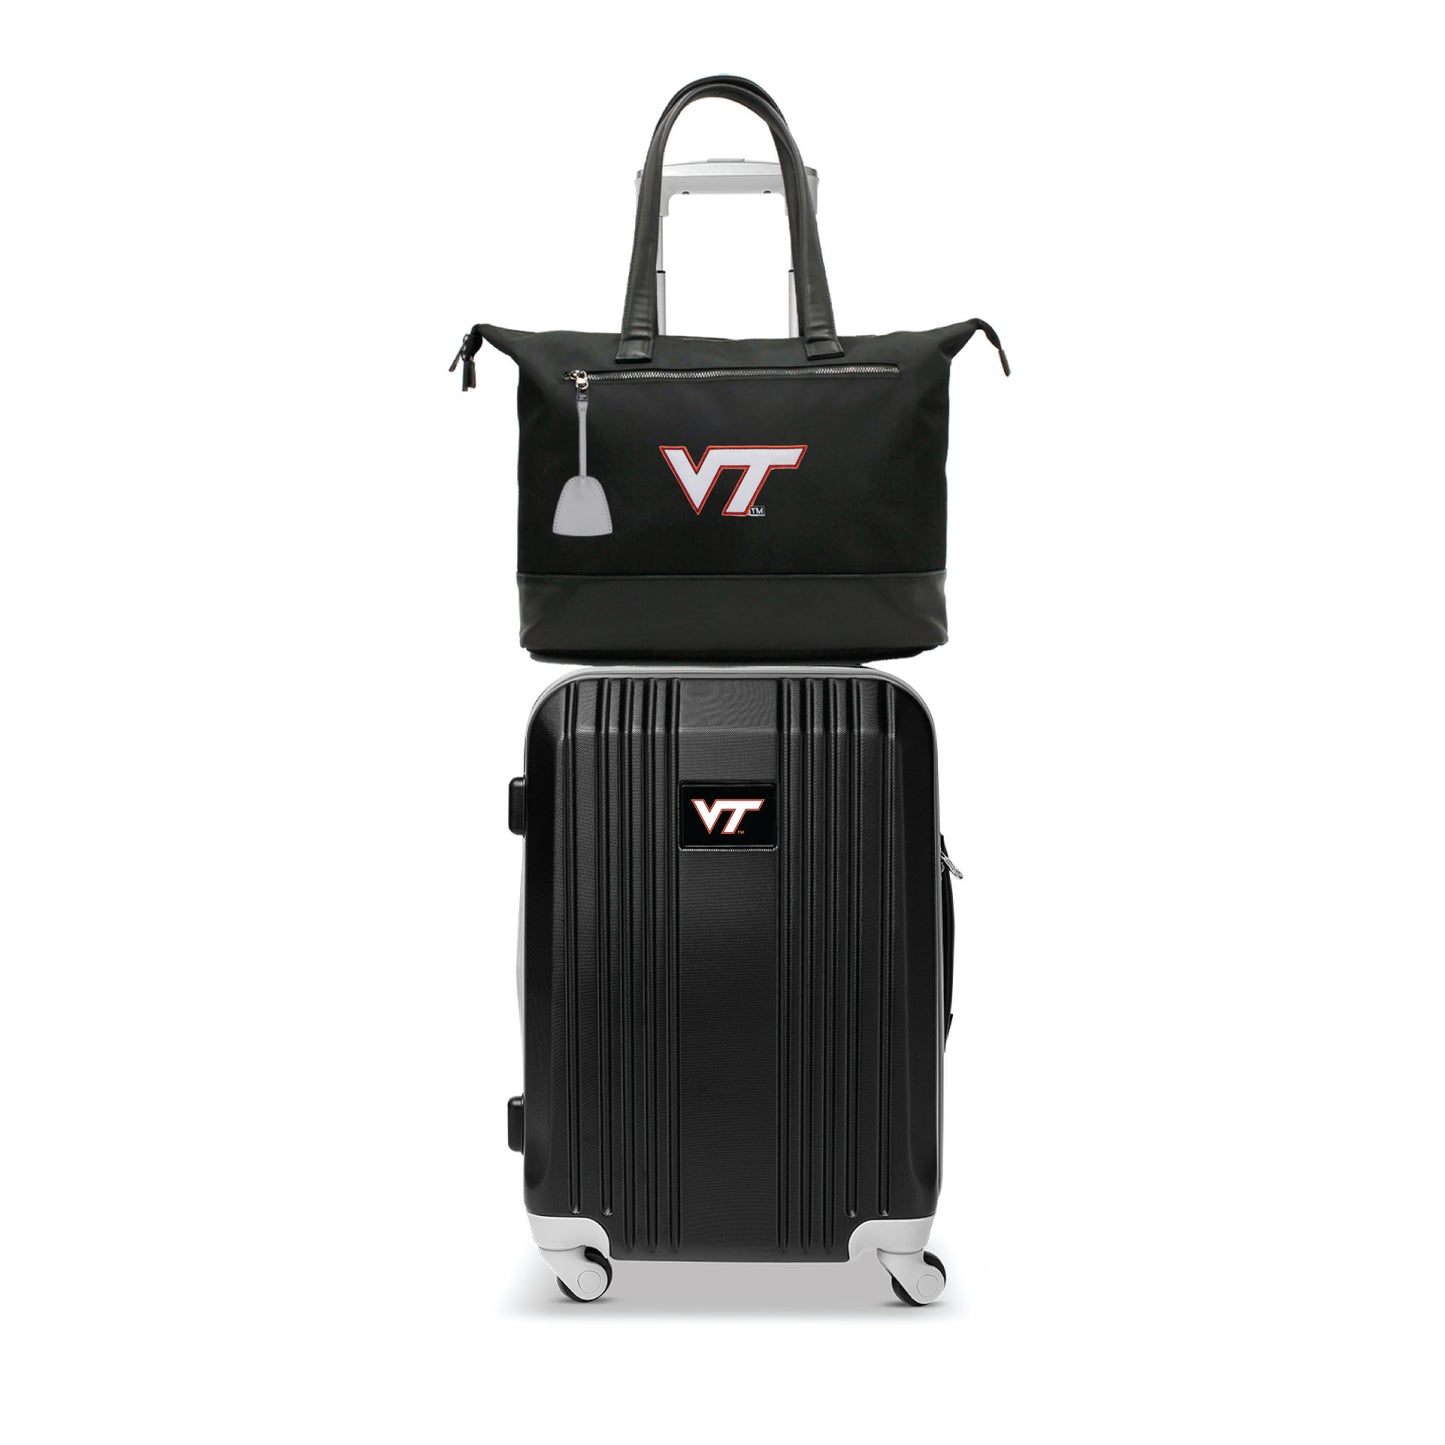 Virginia Tech Hokies Premium Laptop Tote Bag and Luggage Set